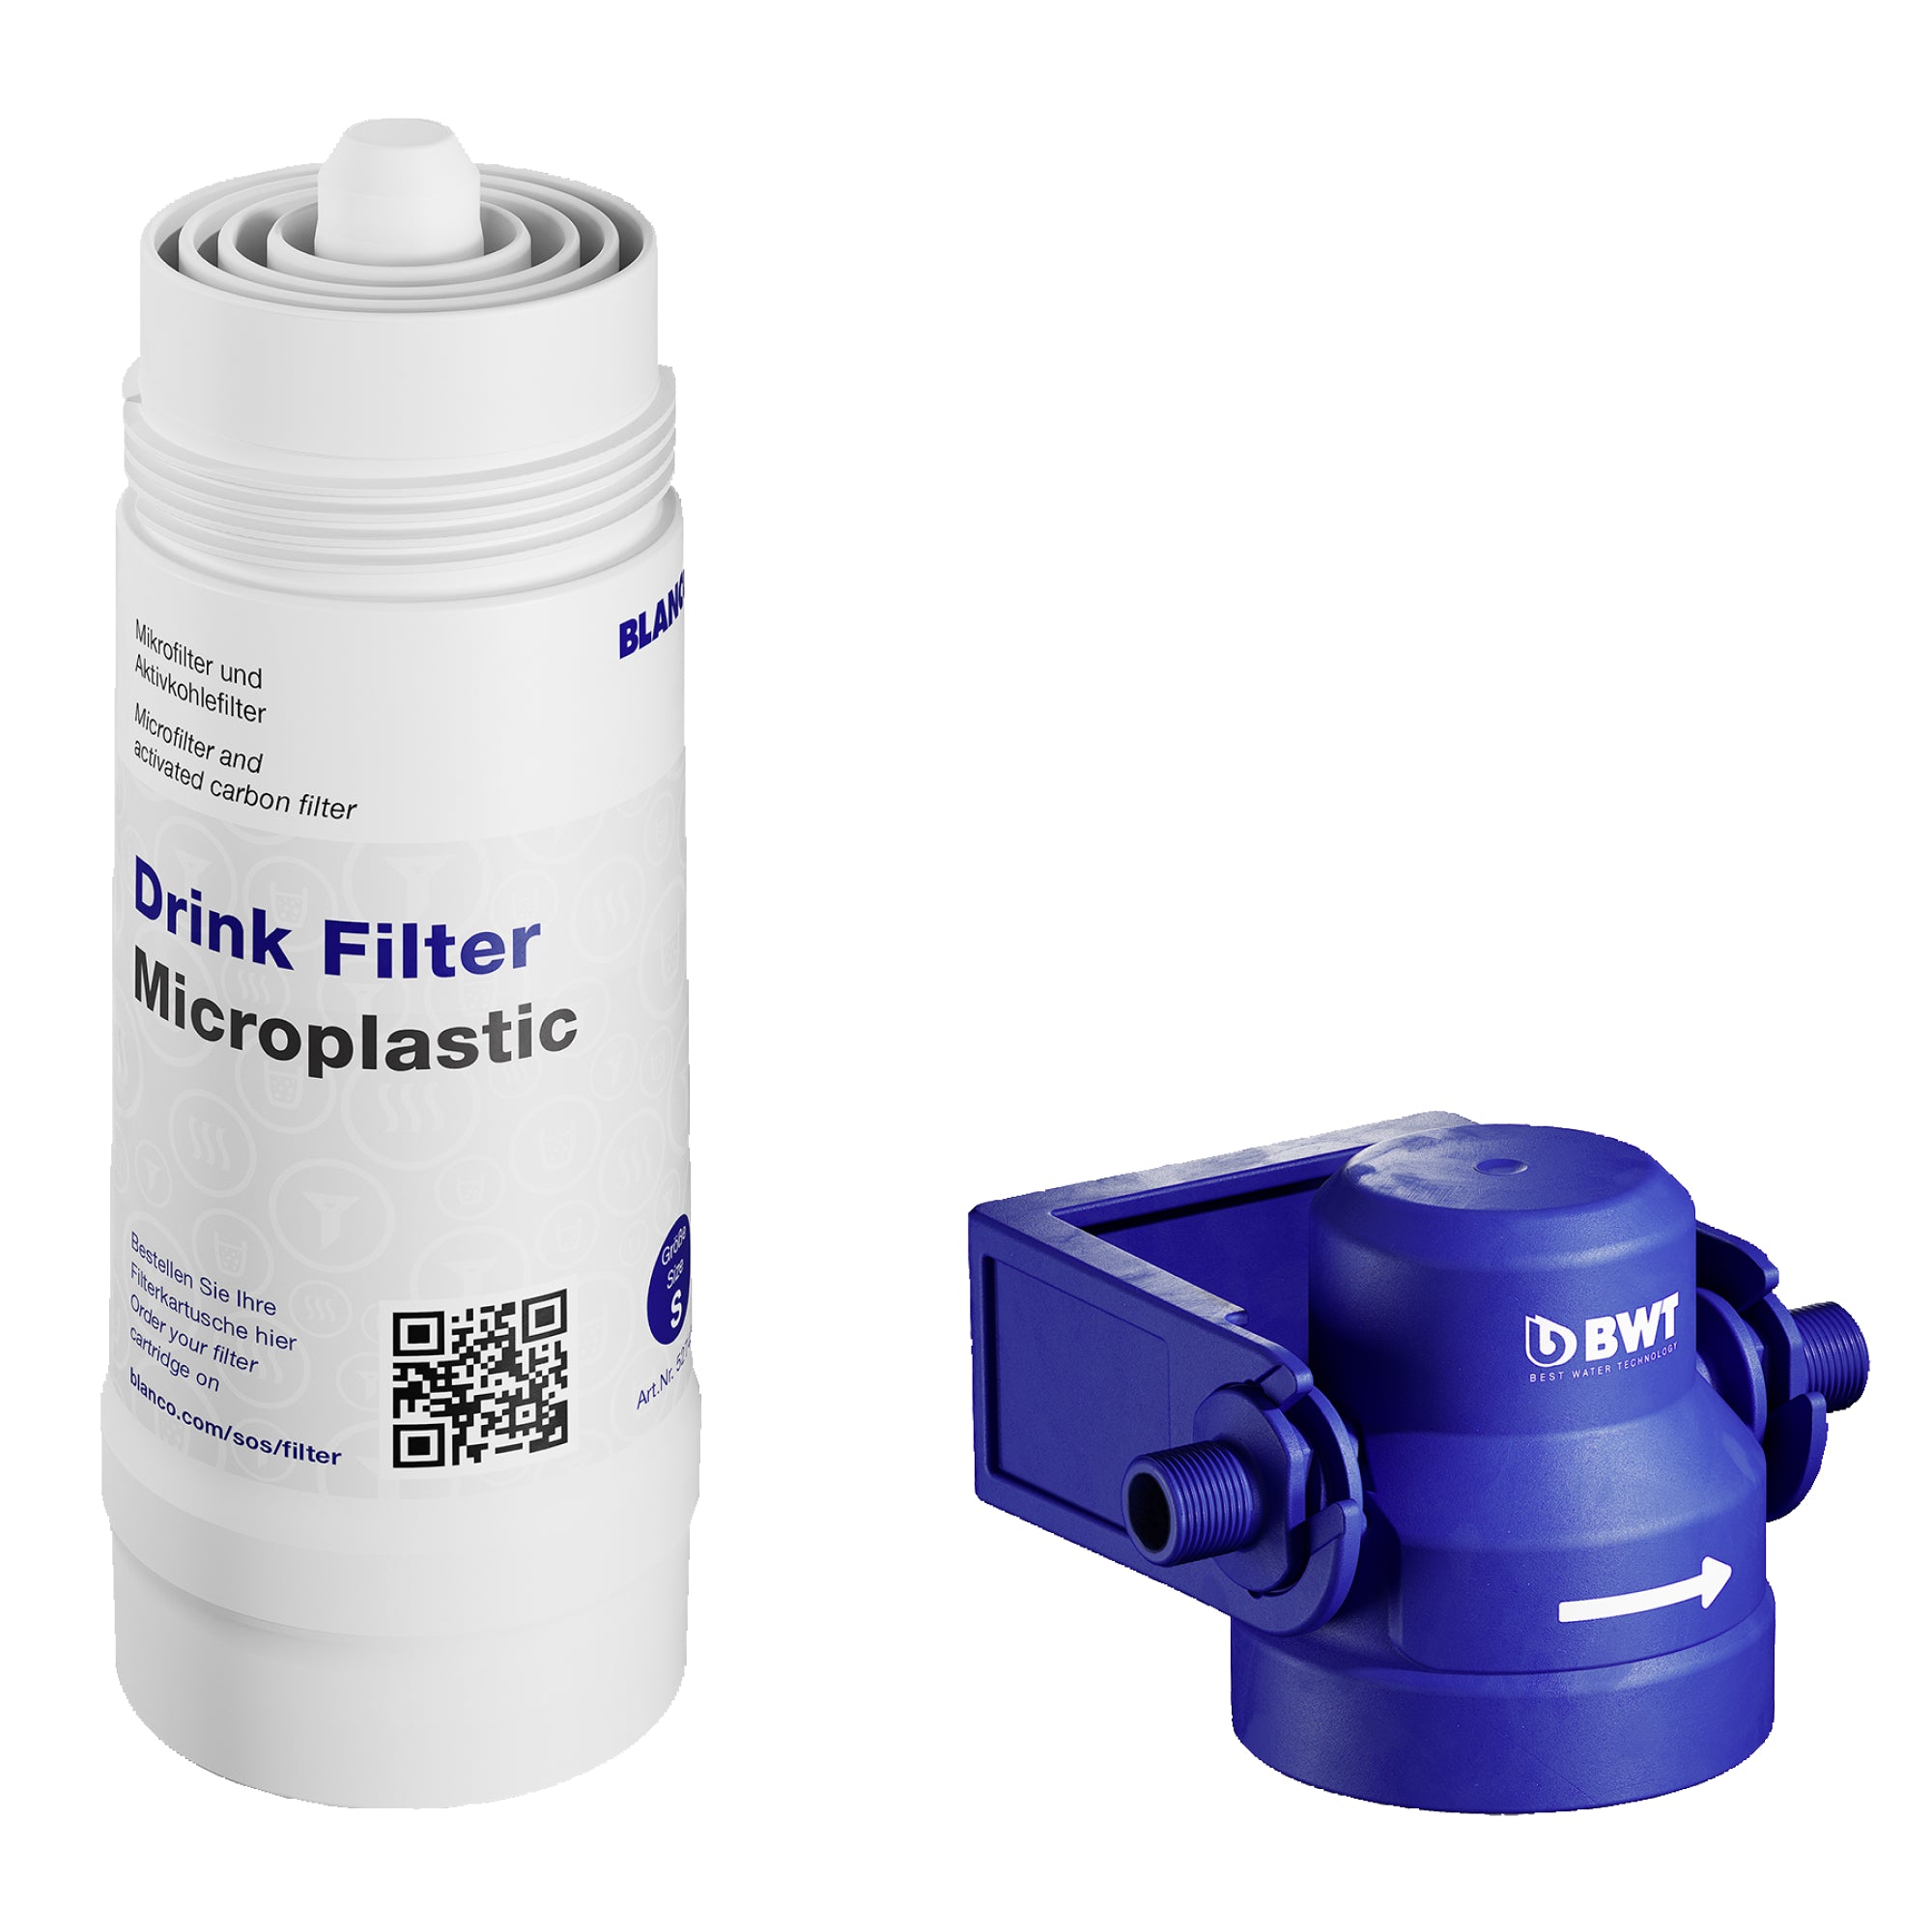 BLANCO Under Sink Filter Set for Micro-Plastics